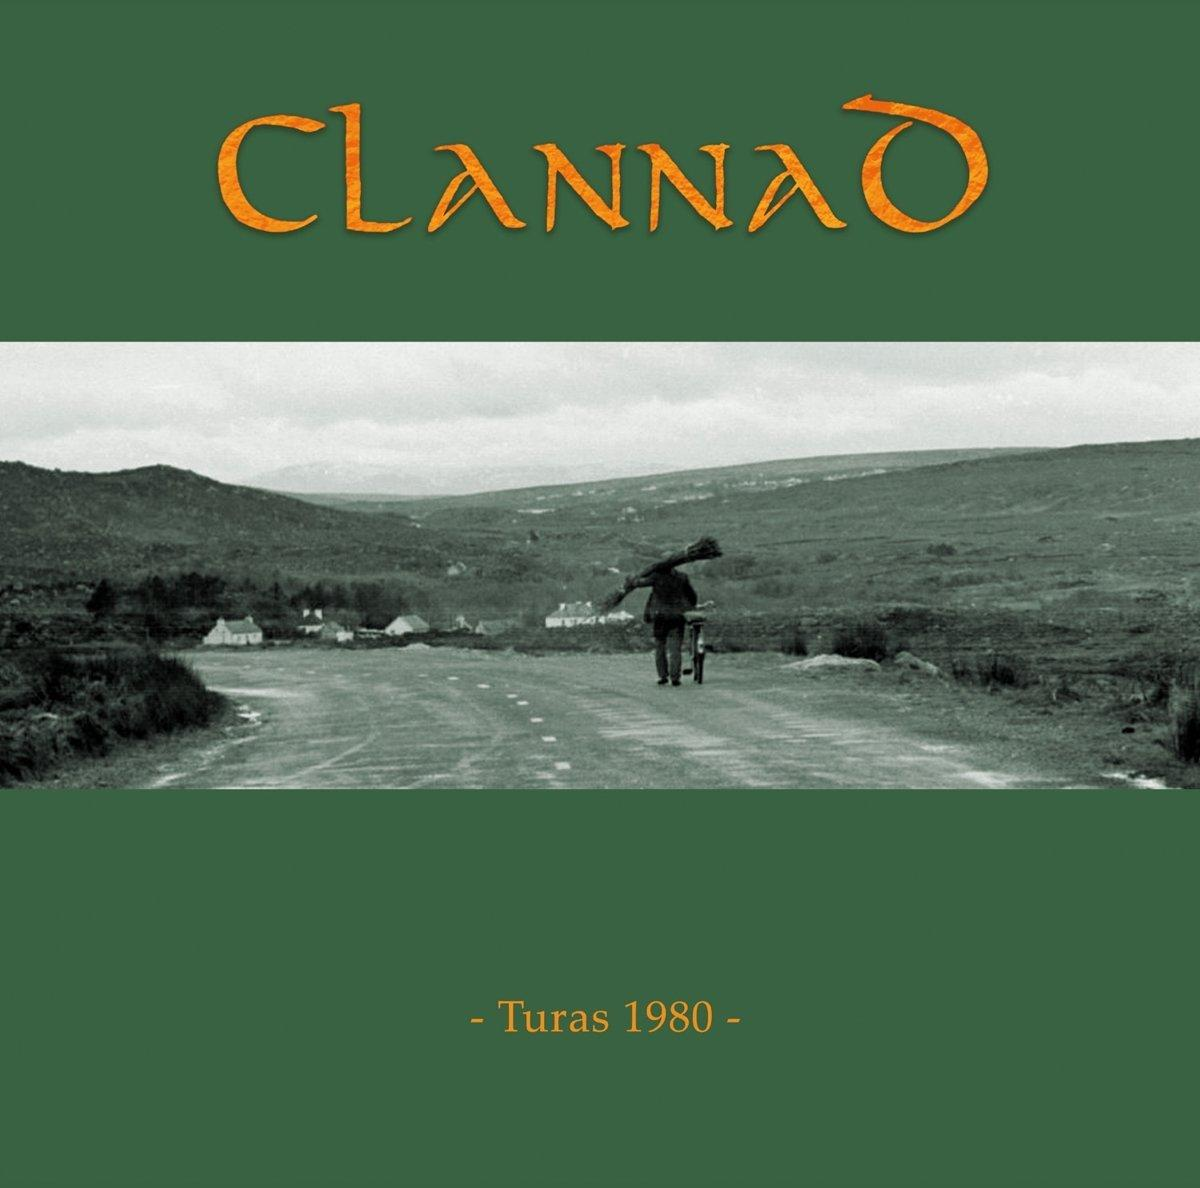 Clannad - Turas (Vinyl) - 1980